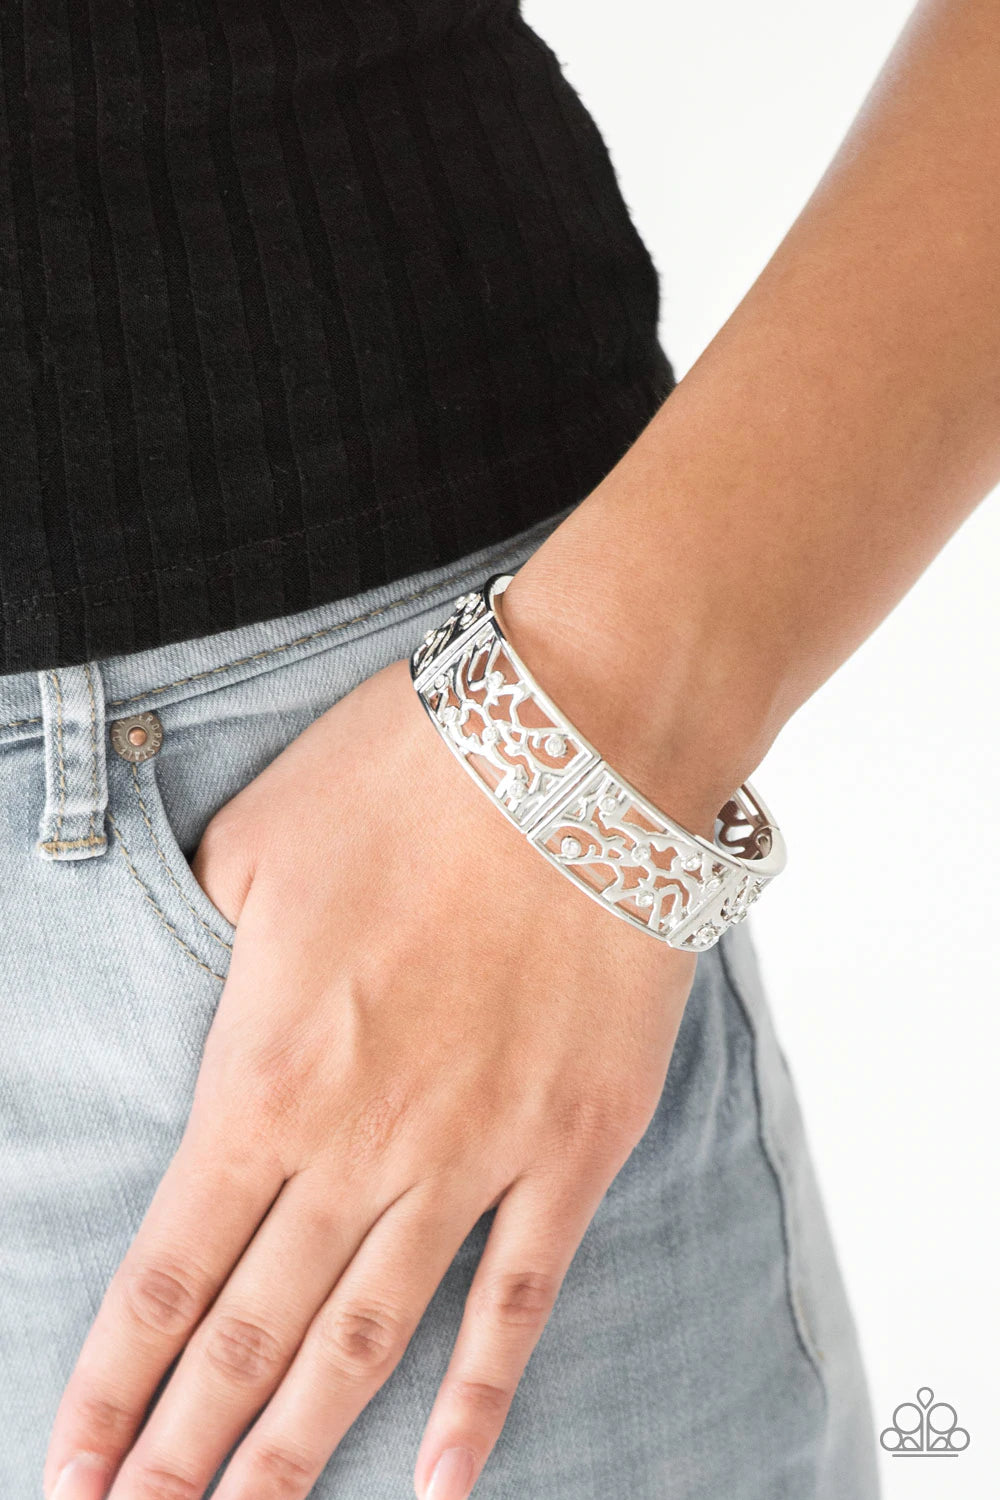 Yours and Vine Paparazzi Accessories Bracelet